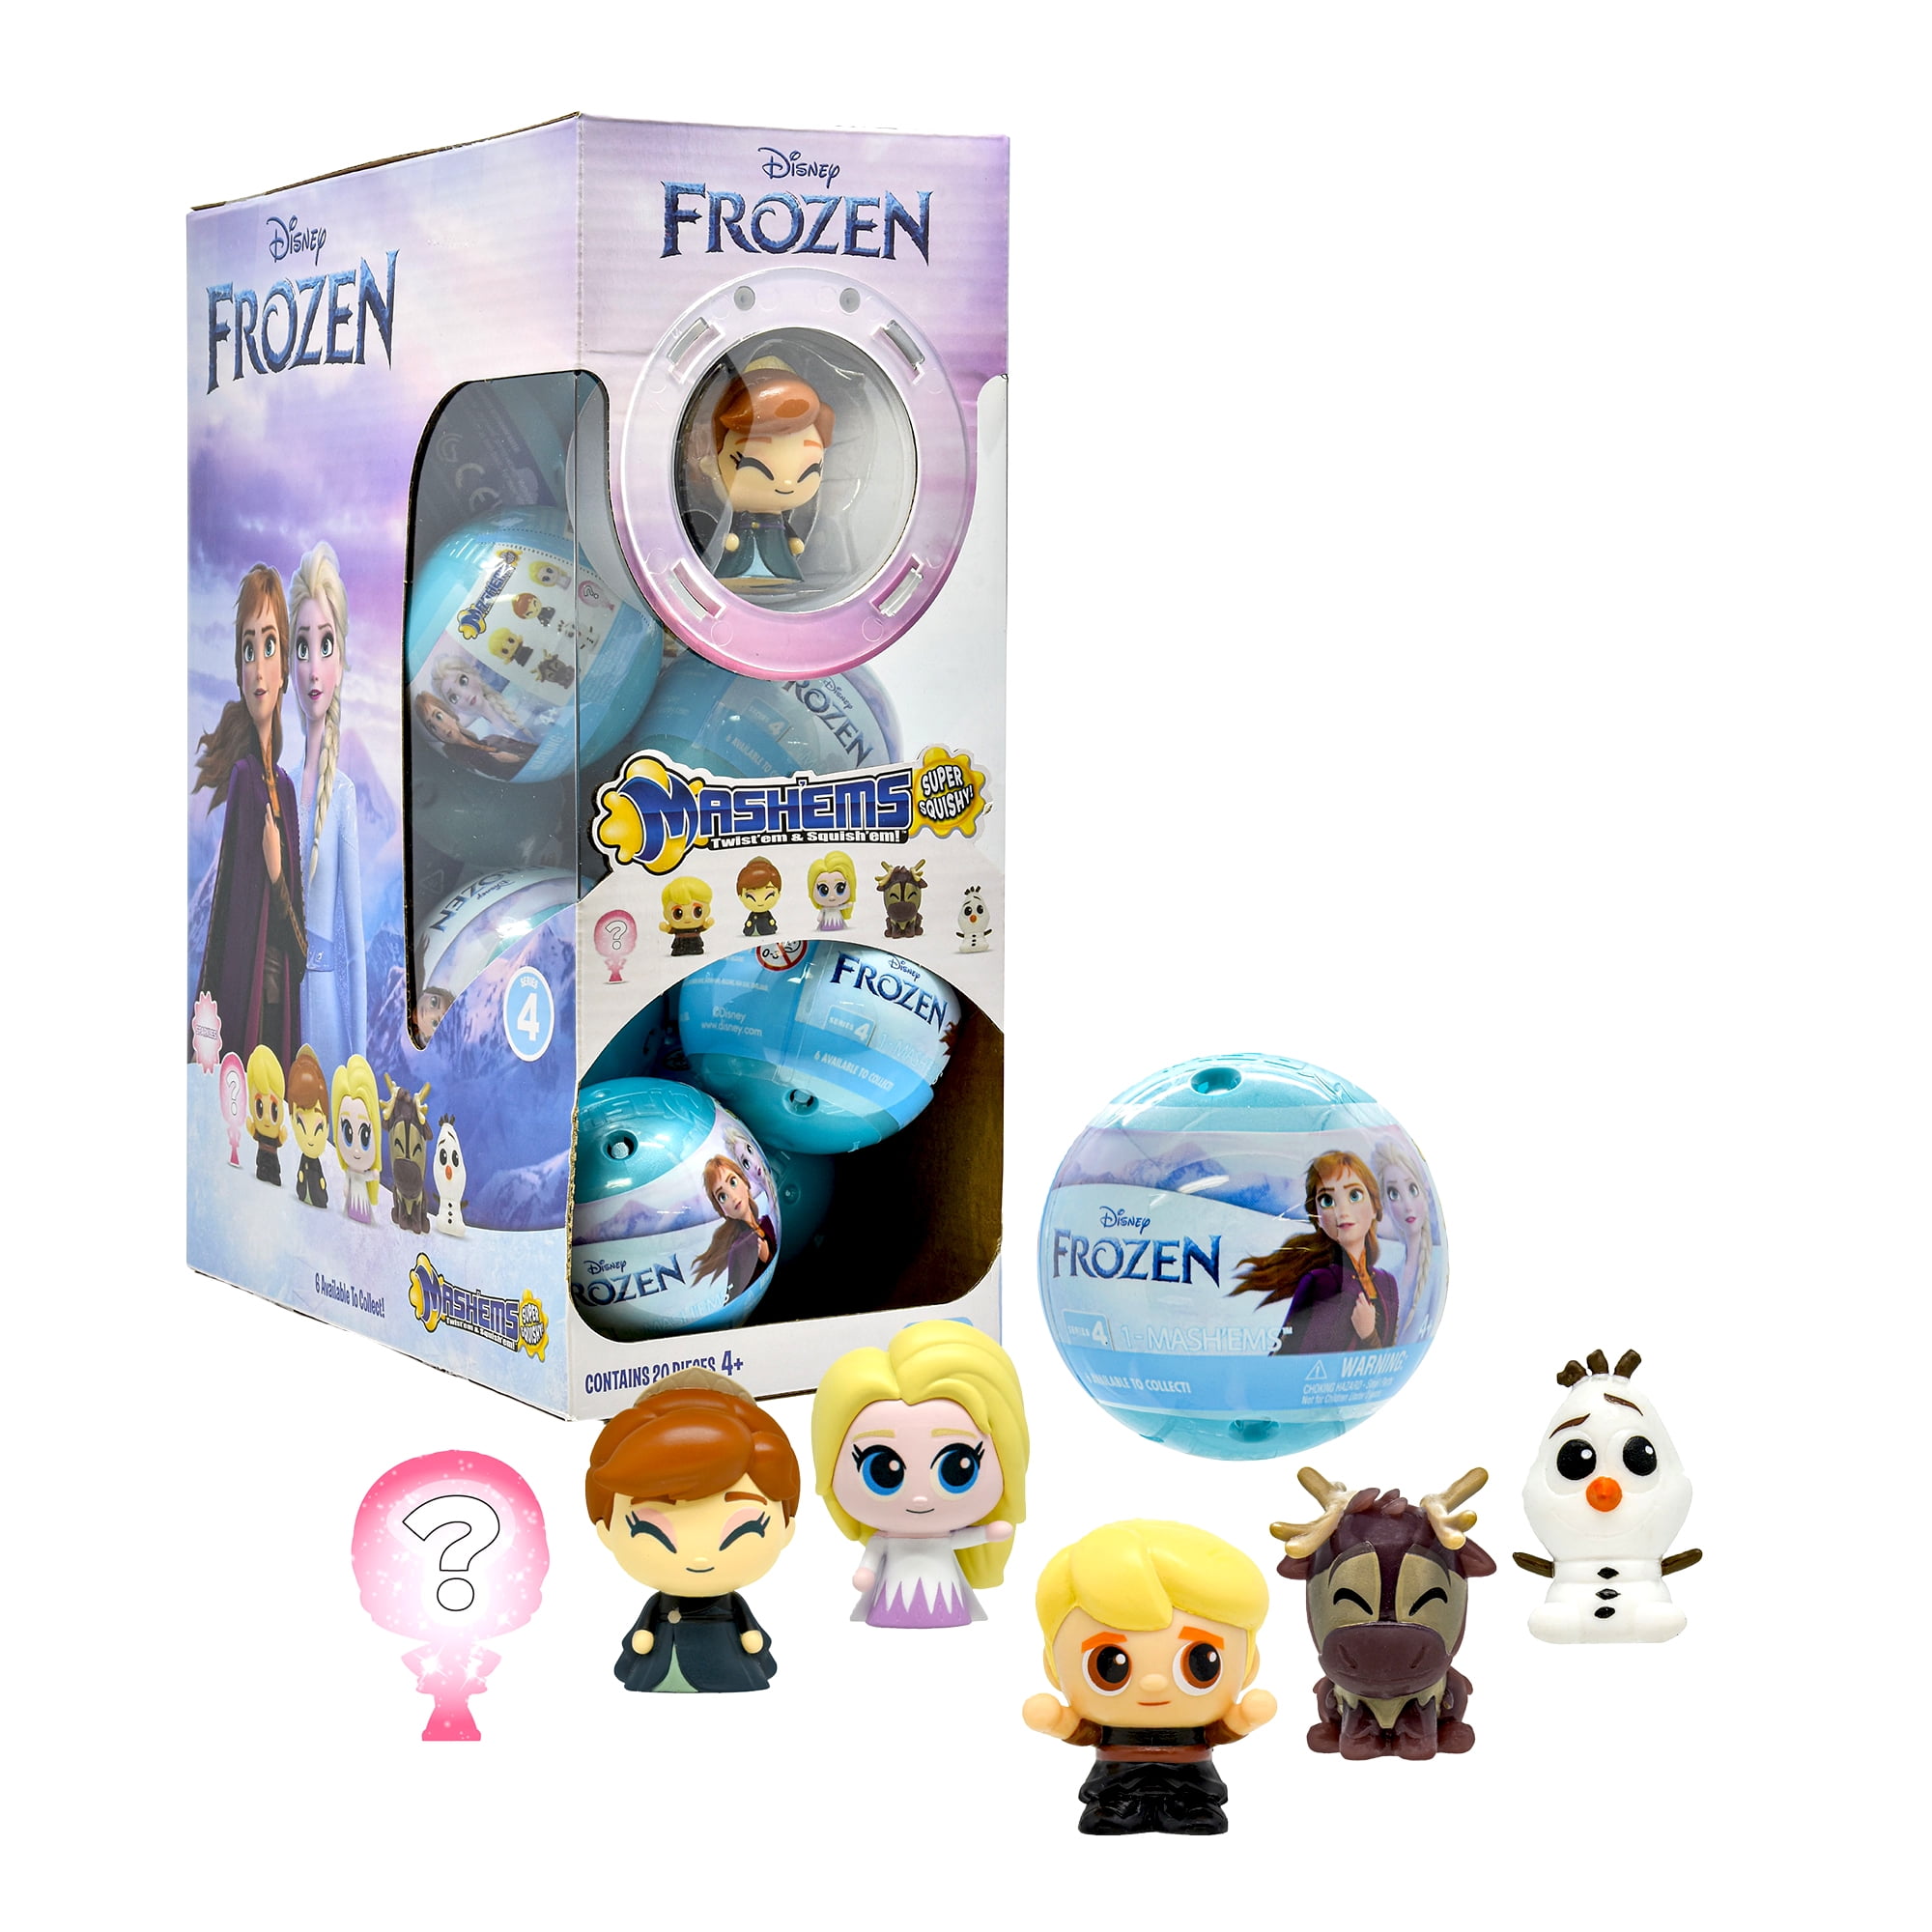 2 Disney Frozen Elsa Series Mashems fashems Chase Squishy Gift Toy Girls Squish 